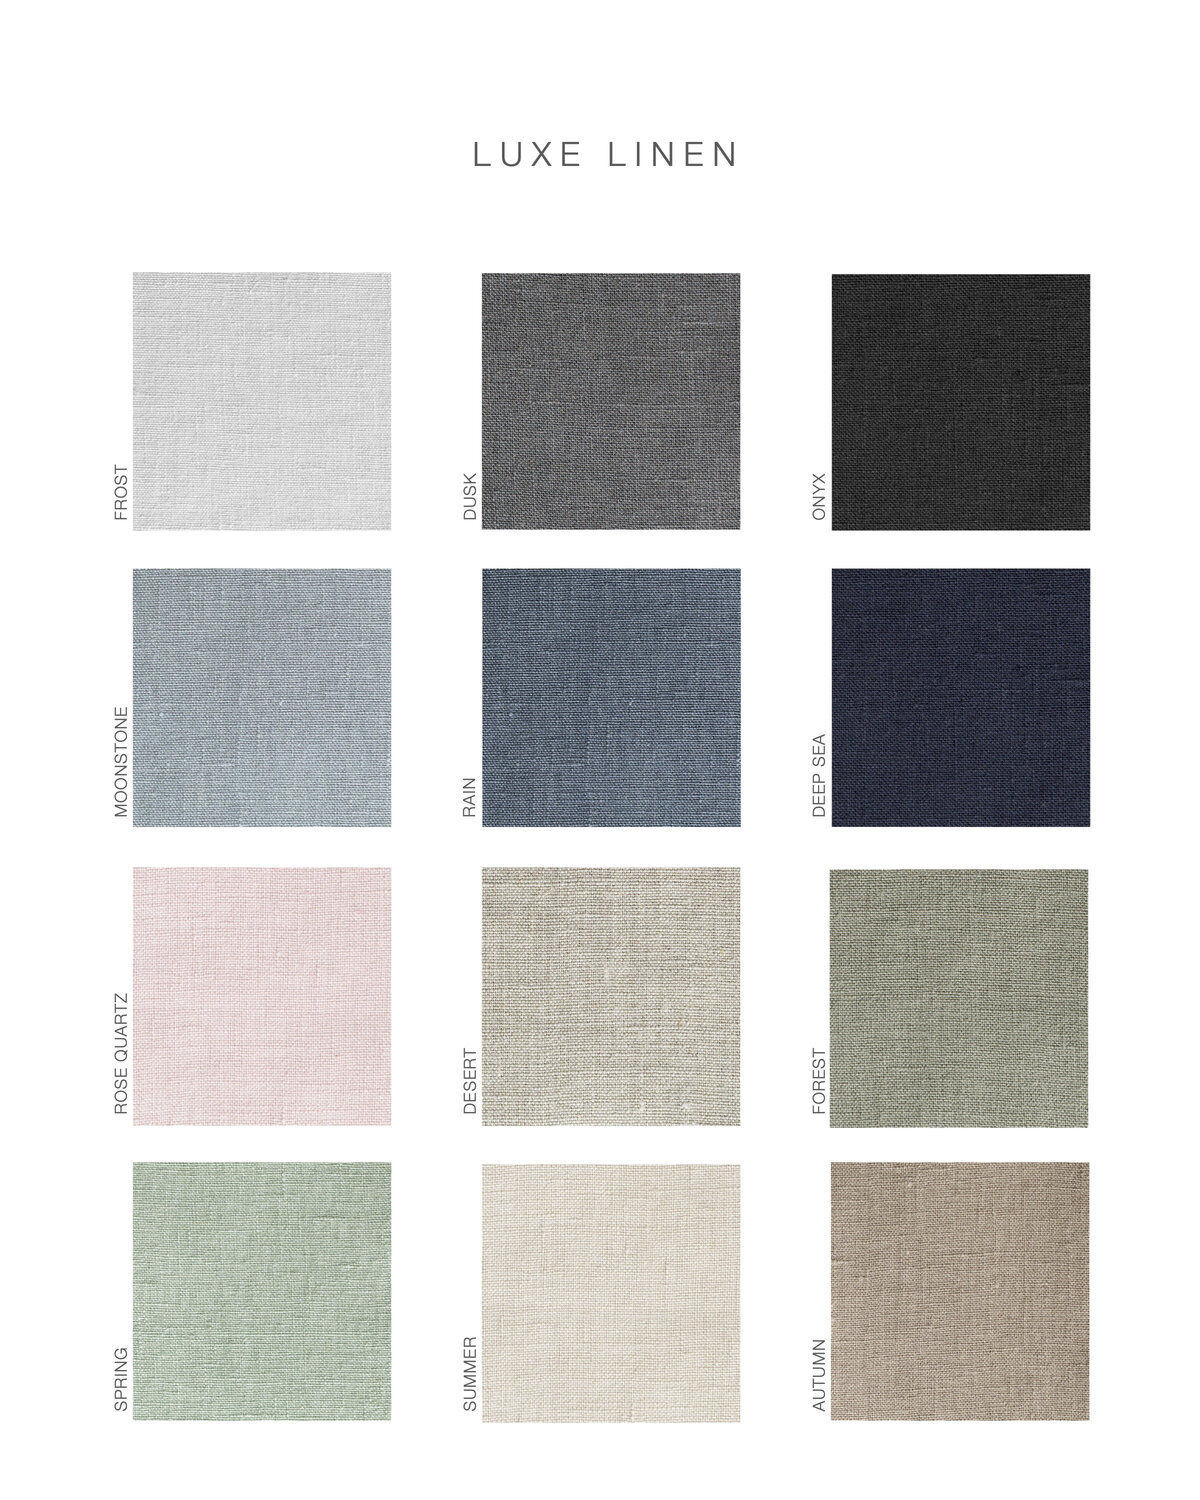 Luxe Linen